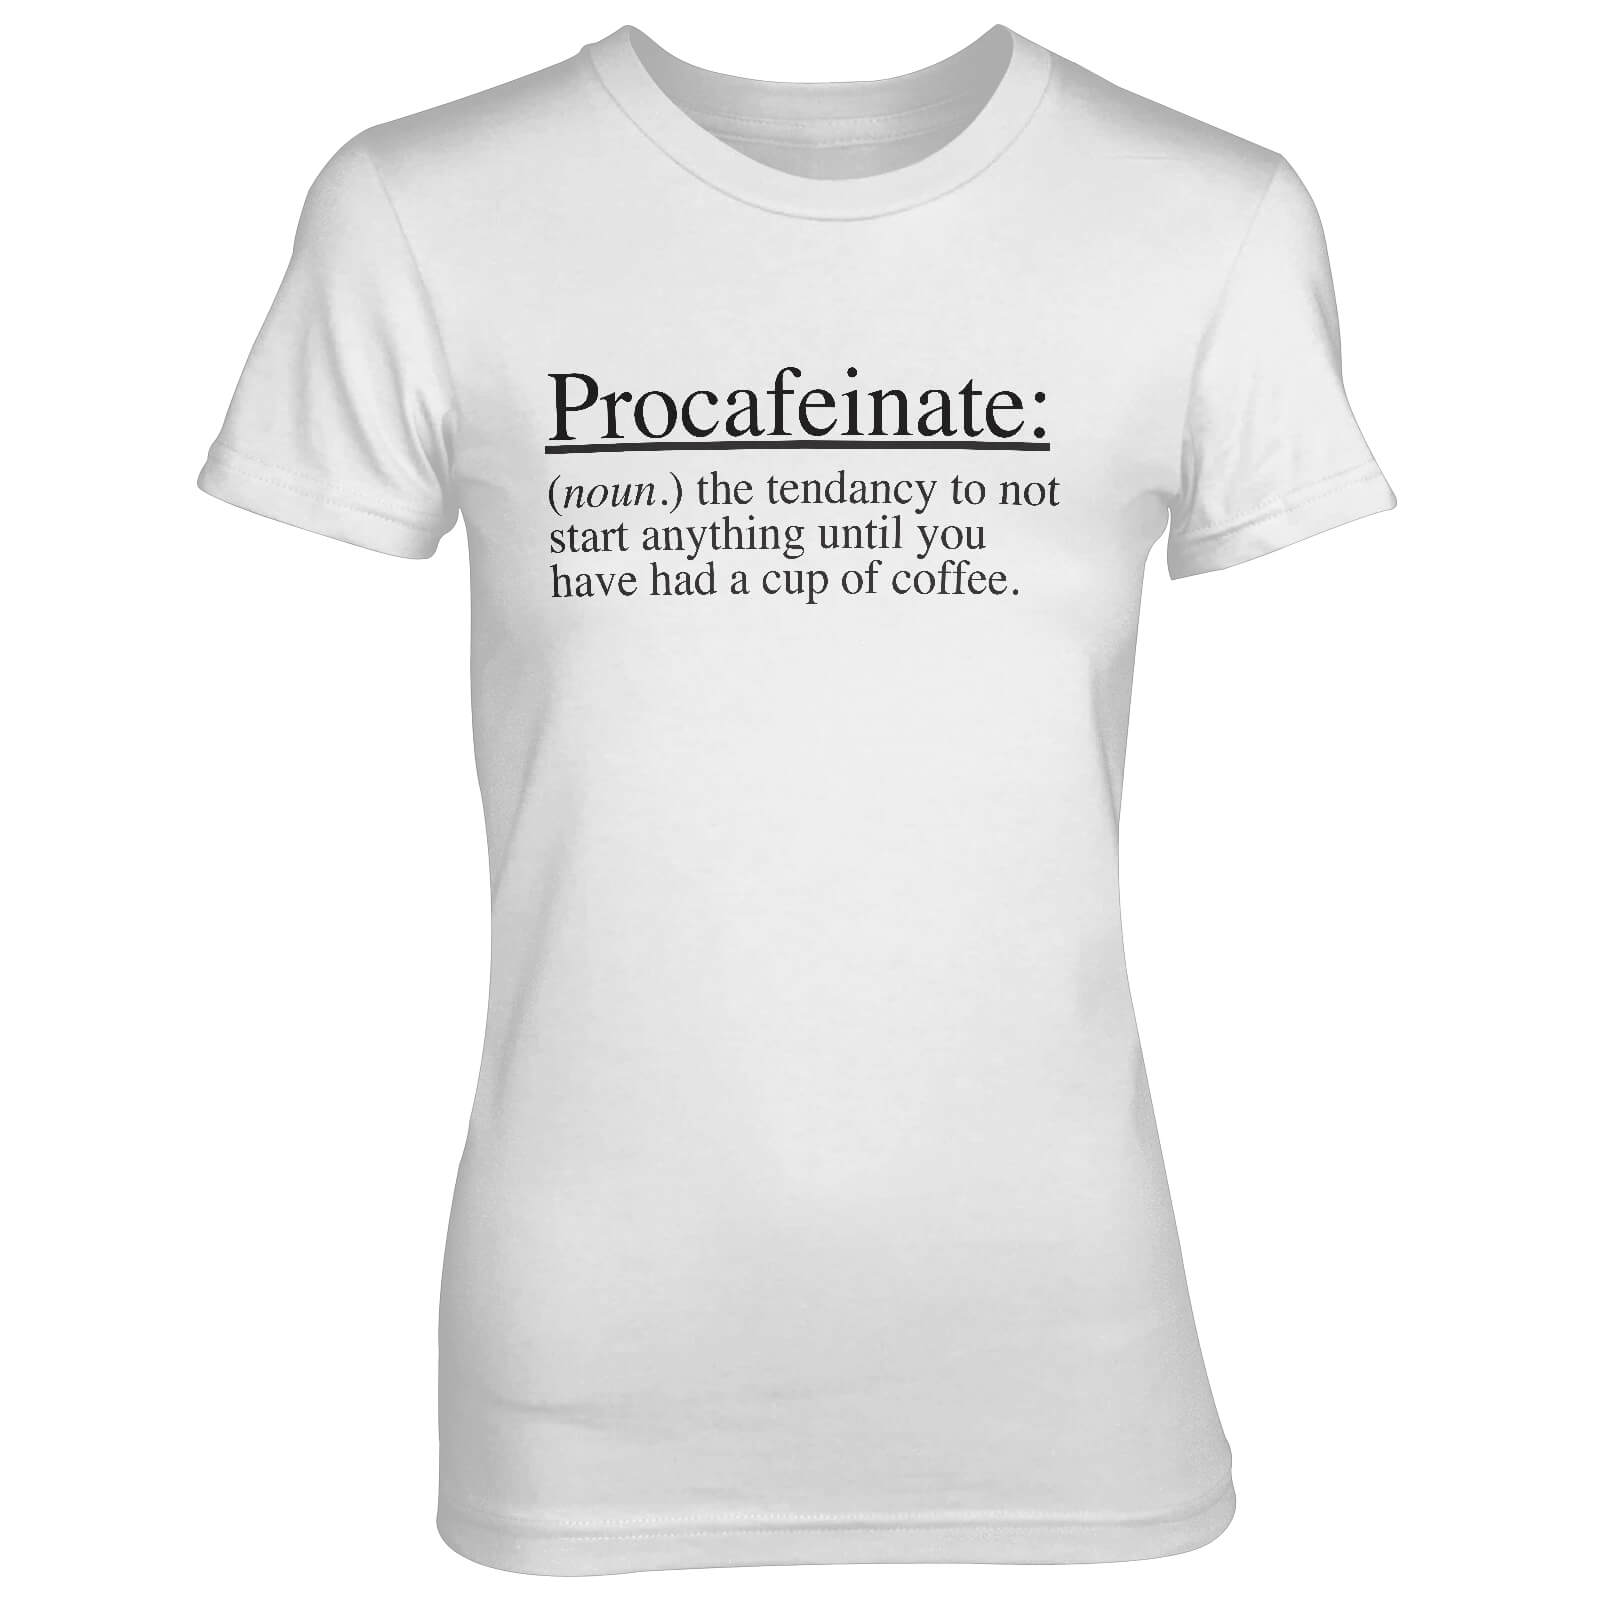 Procafeinate: The Tendancy To Not Start Anything Women's White T-Shirt - S - White